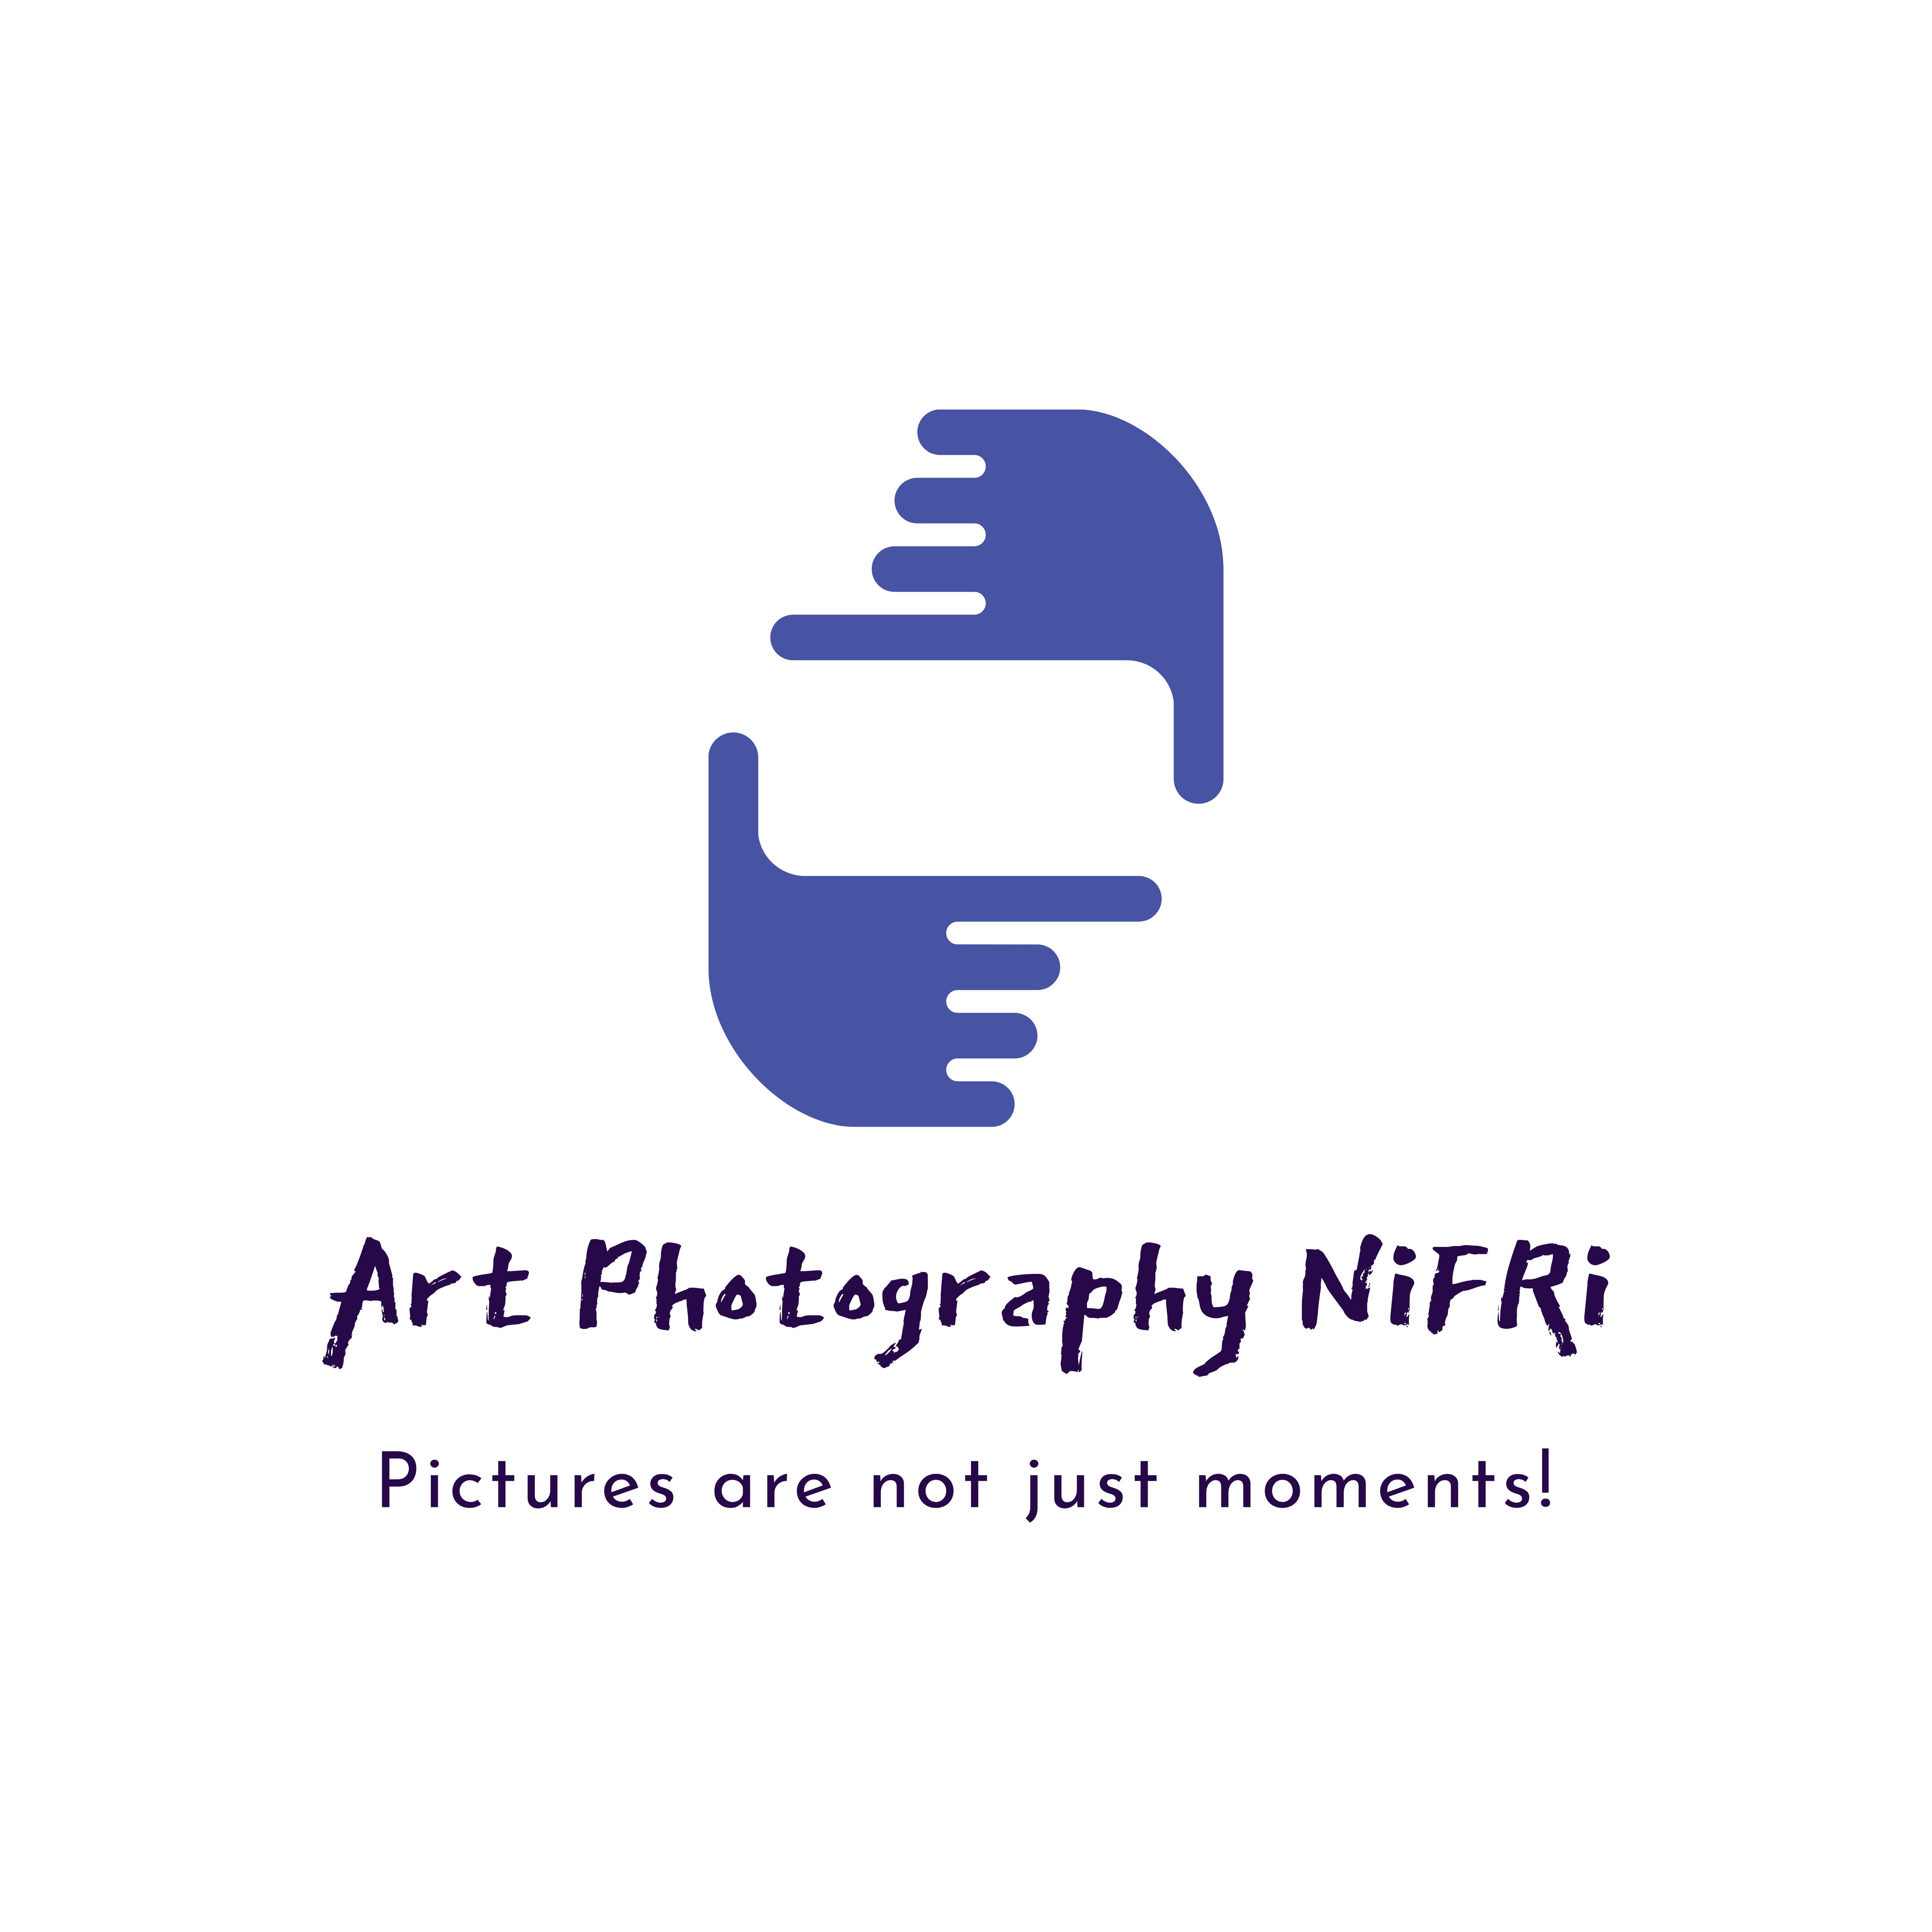 Artphotography NiFRi